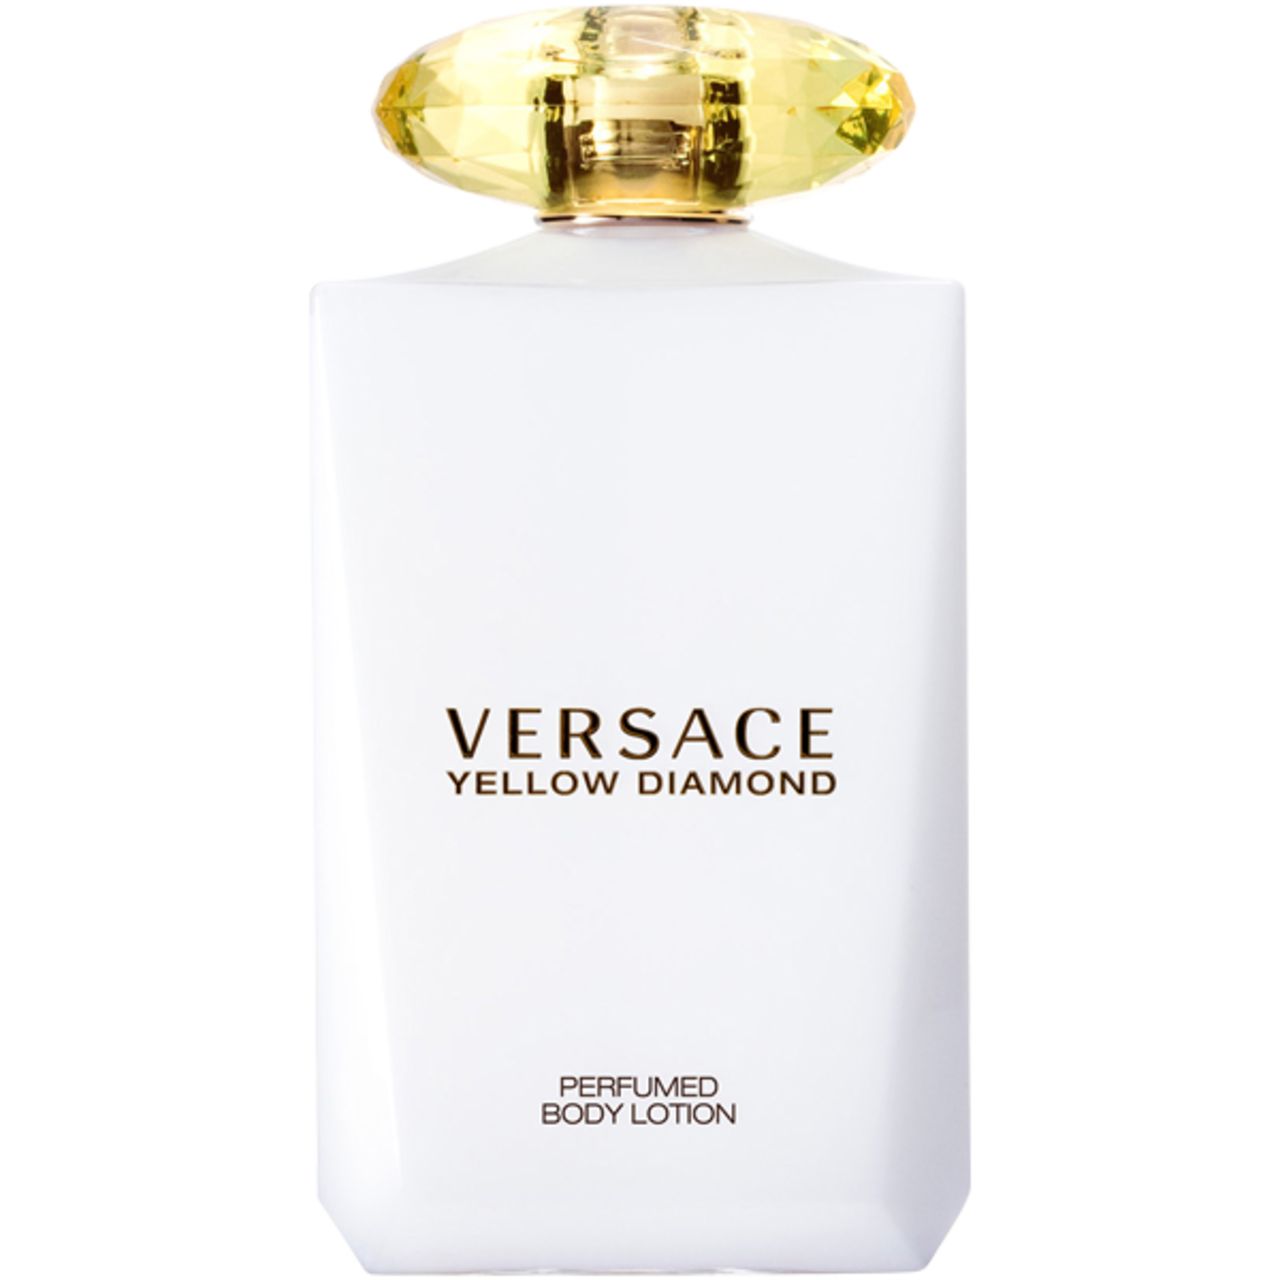 Versace Yellow Diamond Body Lotion